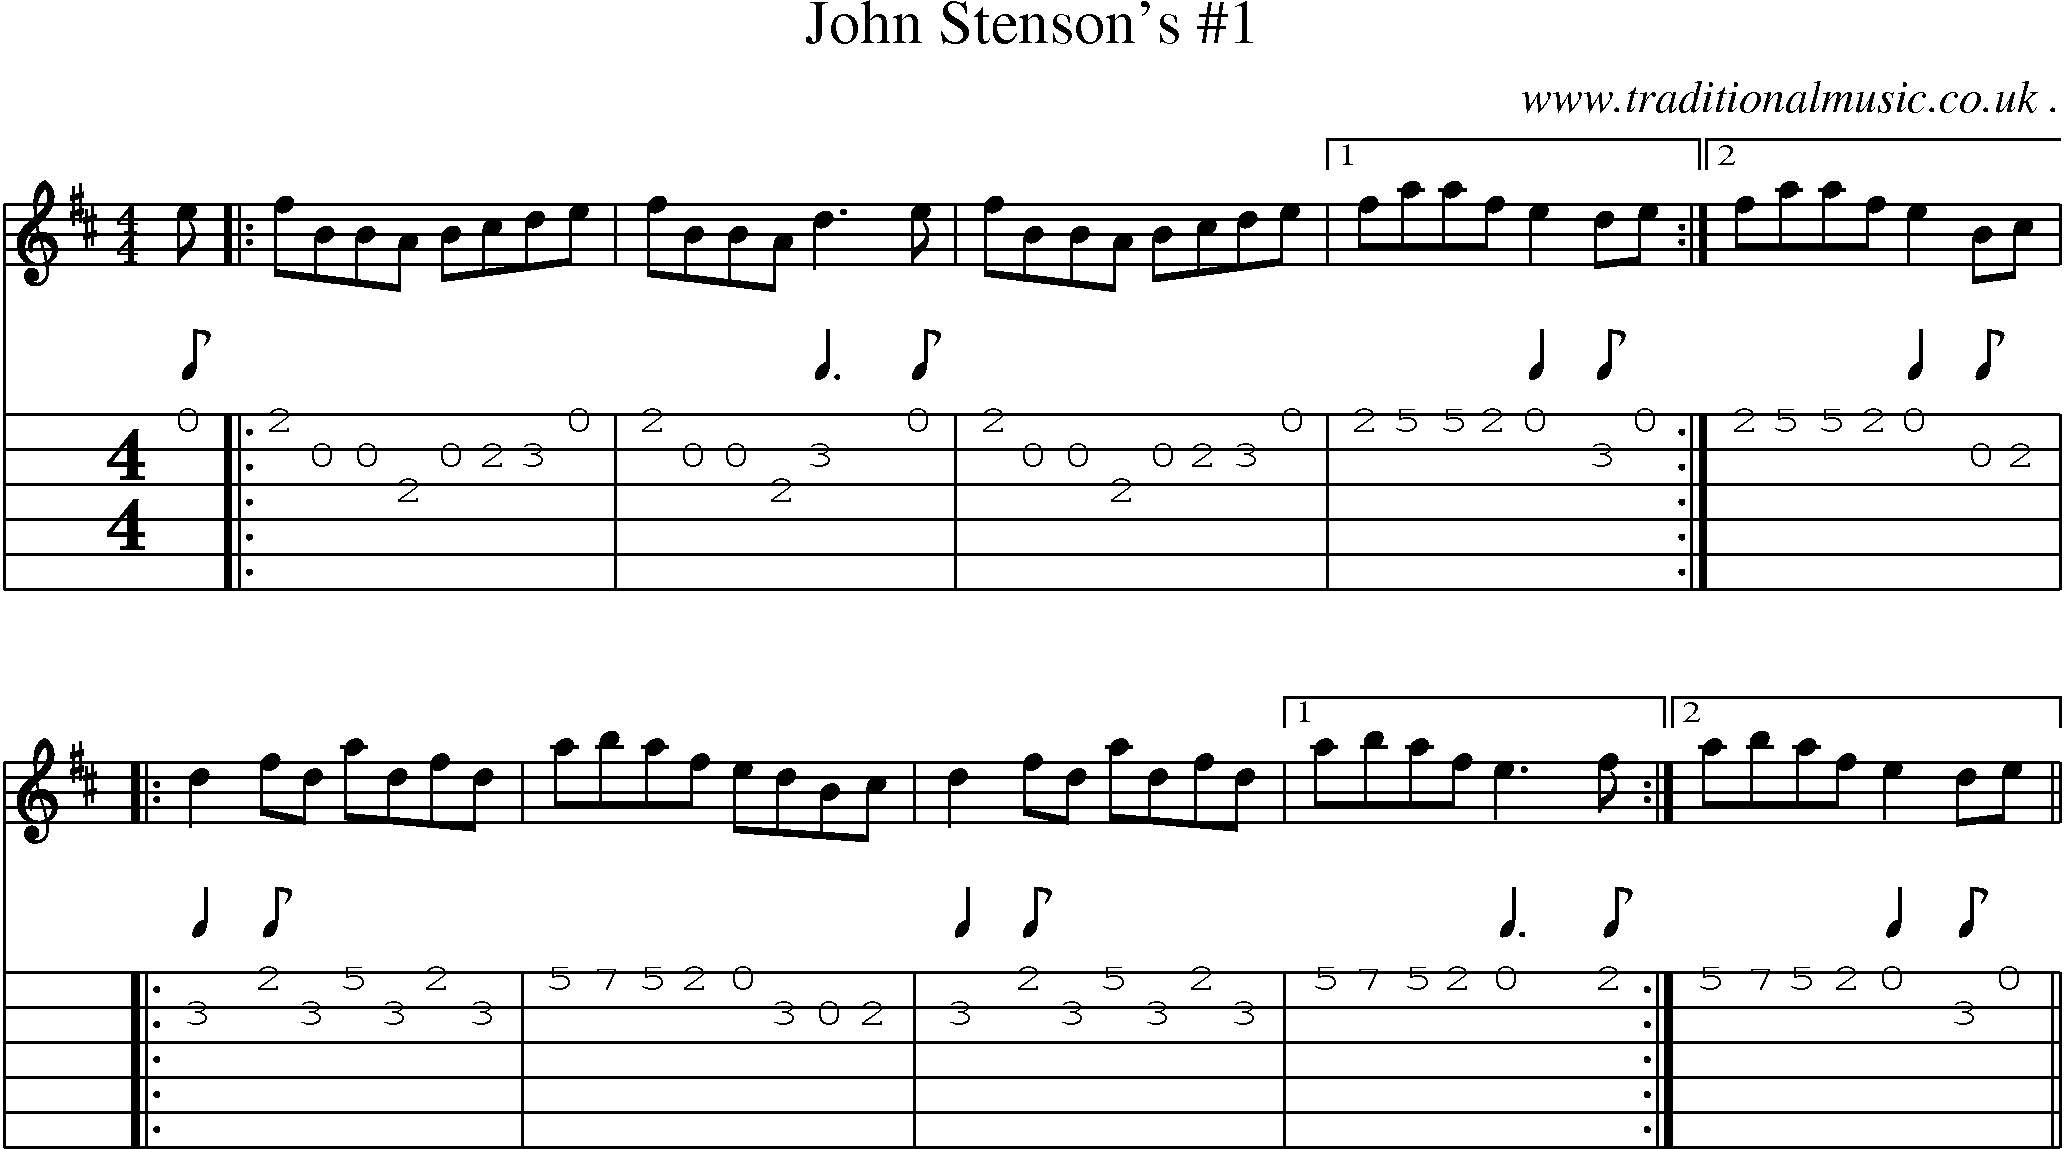 Sheet-Music and Guitar Tabs for John Stensons 1